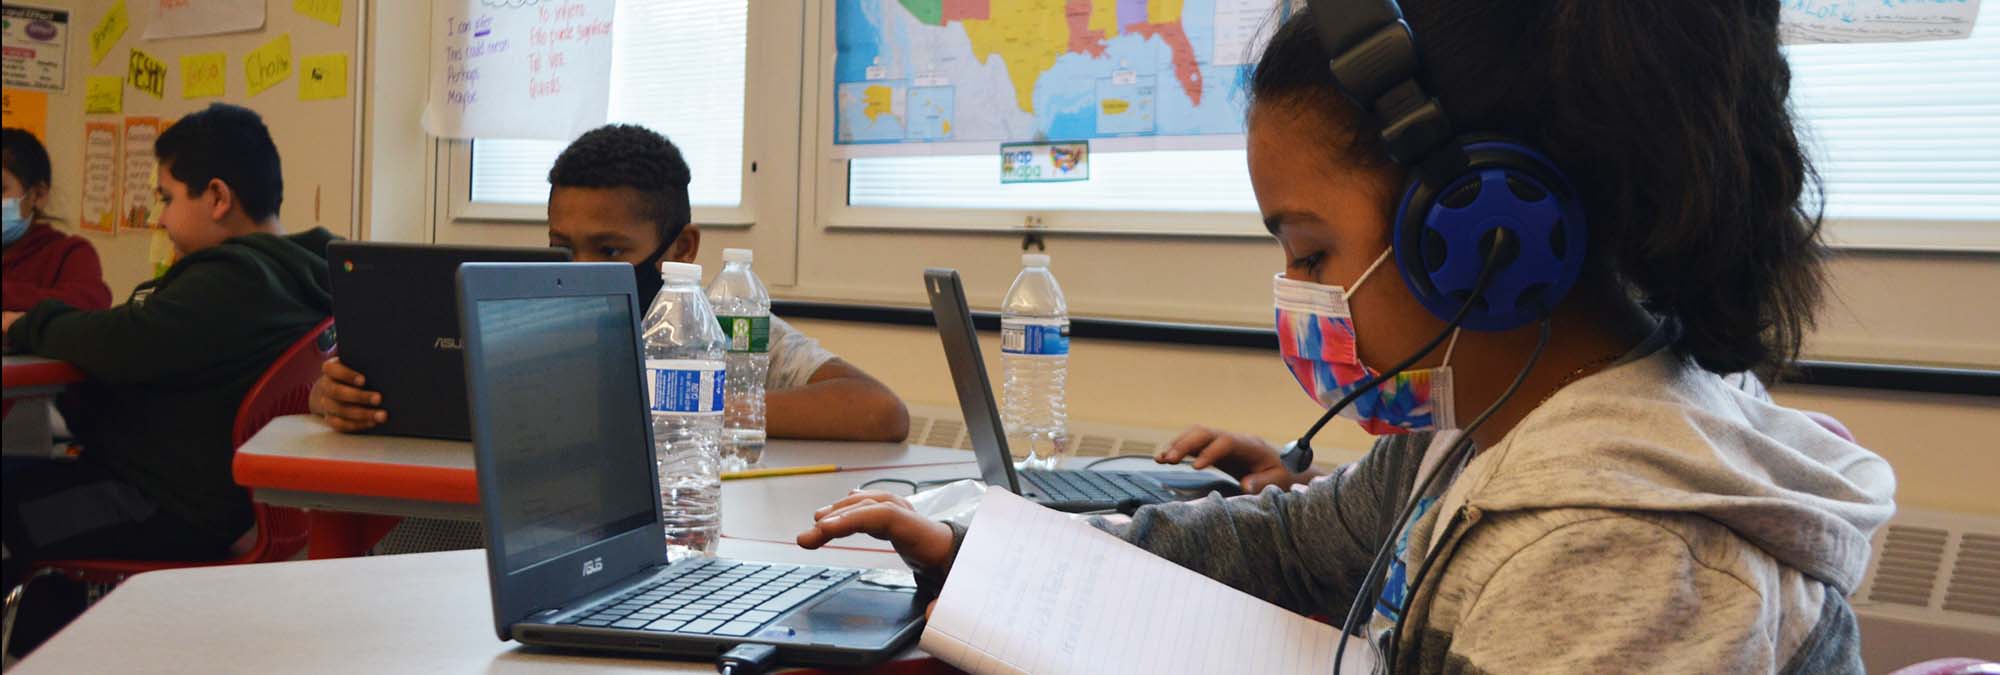 Student wearing headphones works on laptop in classroom